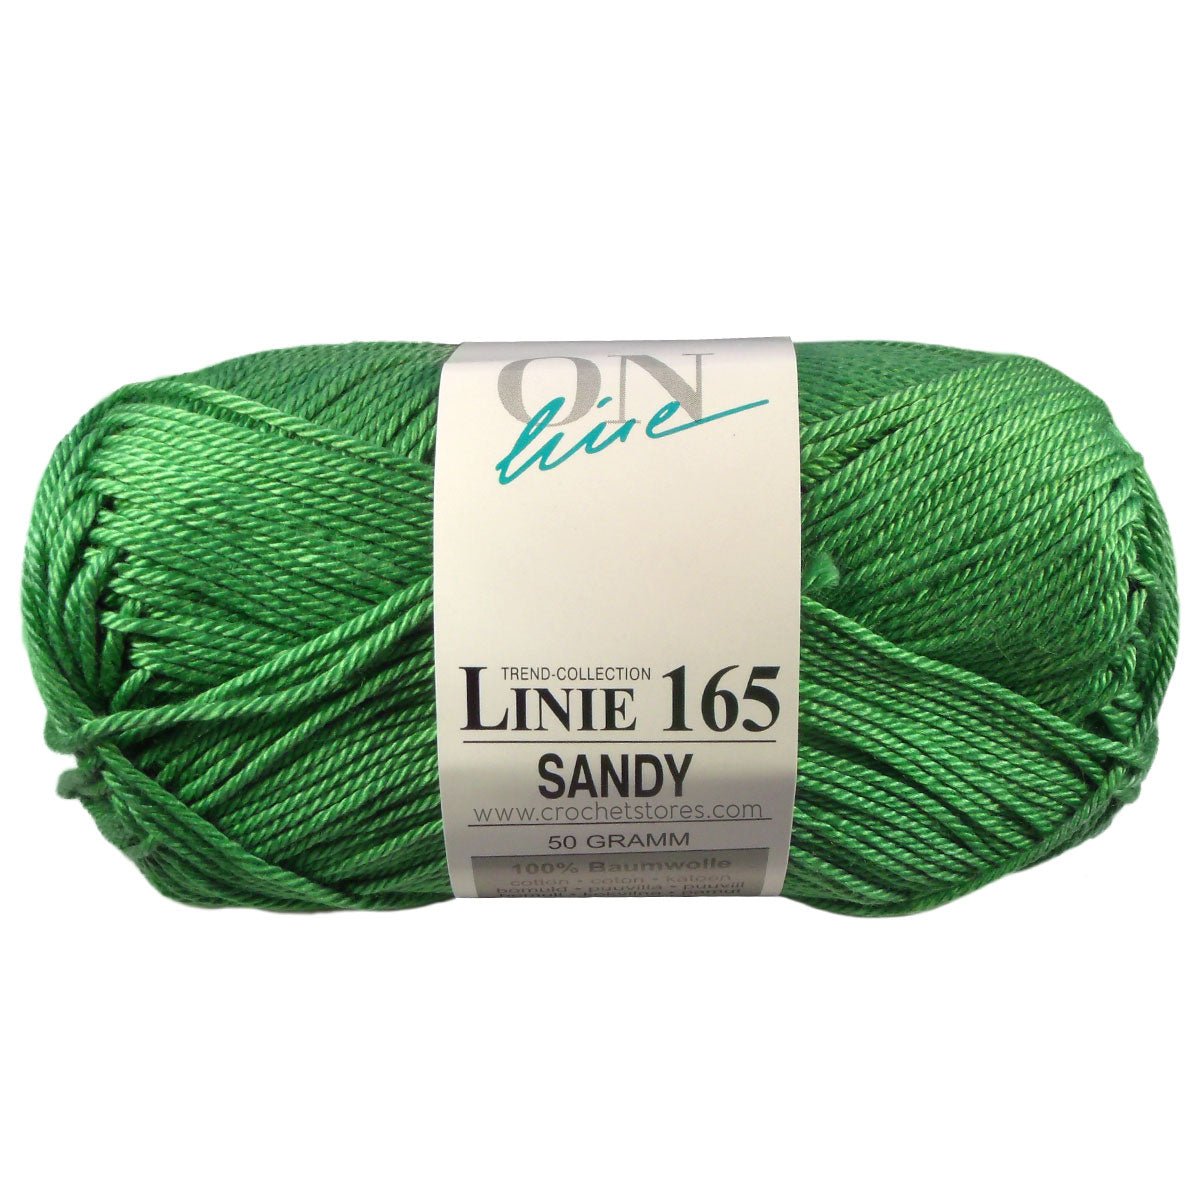 SANDY - Crochetstores110165-00804014366125112